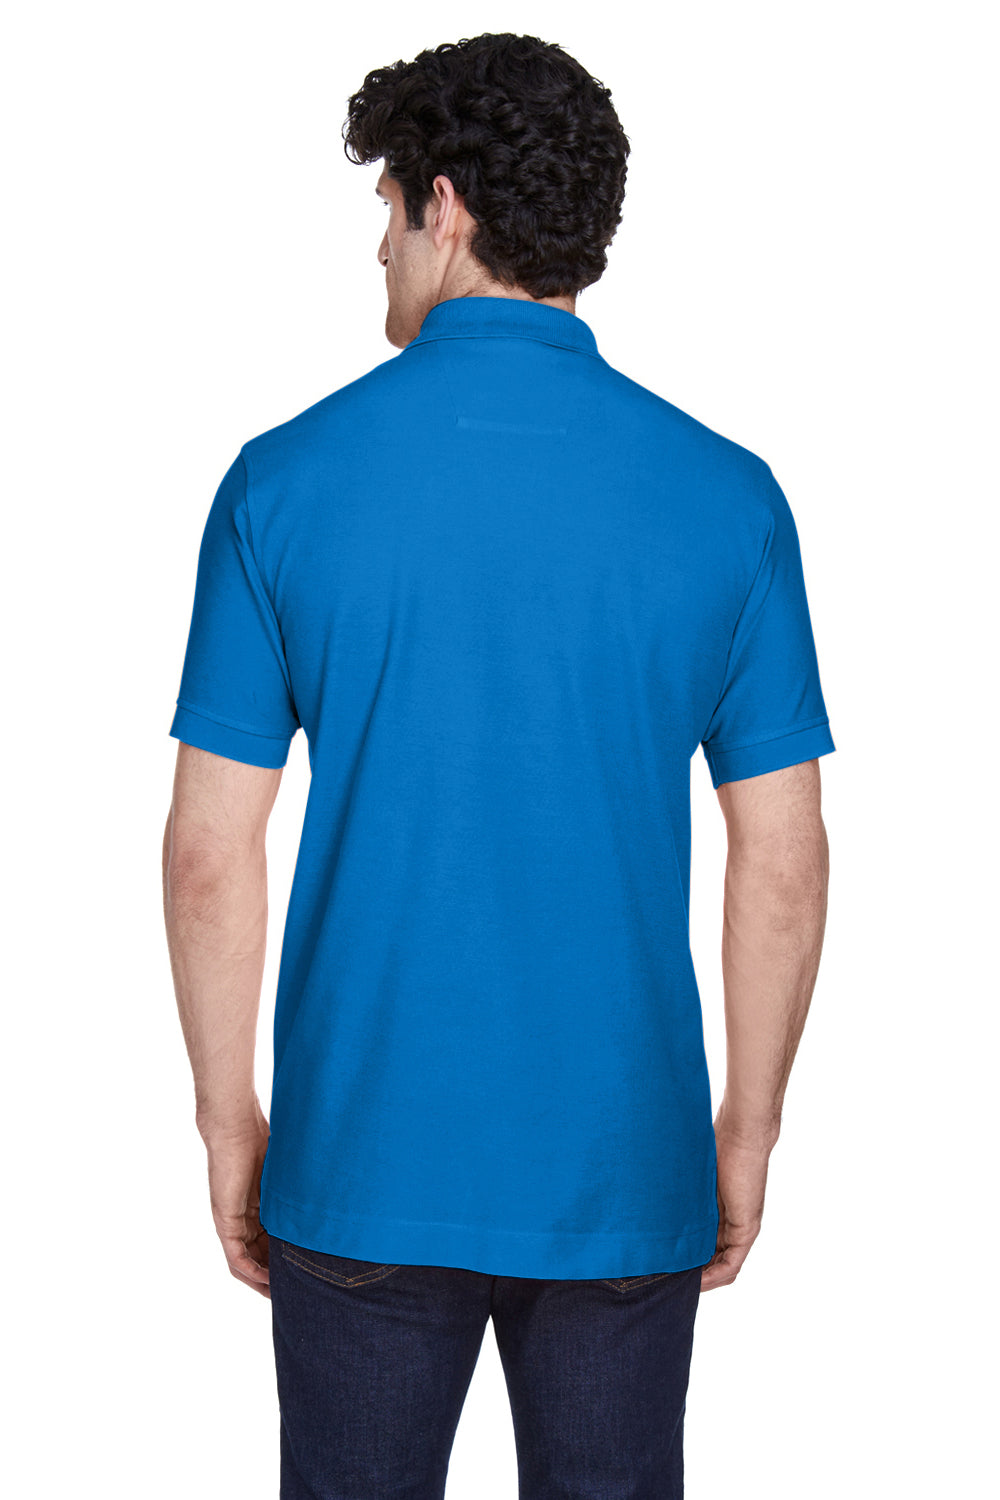 Devon & Jones Men's Pima Pique Short Sleeve Polo Shirts D100